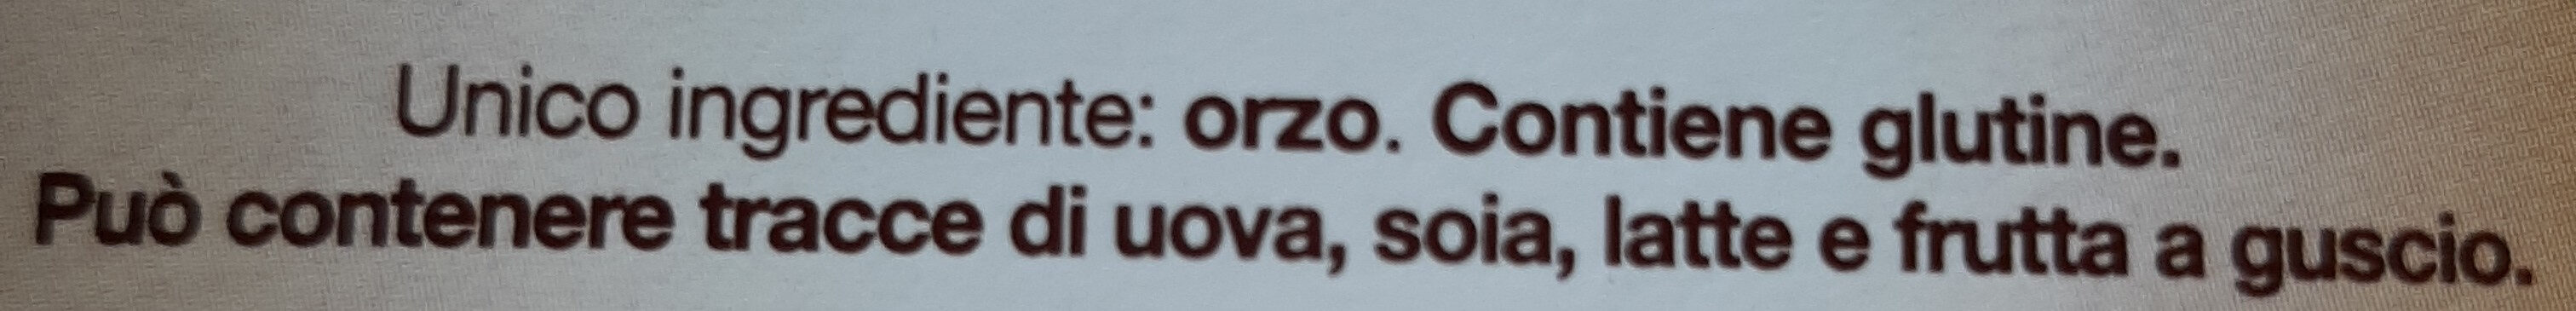 Orzo Bimbo capsule - Ingredients - it